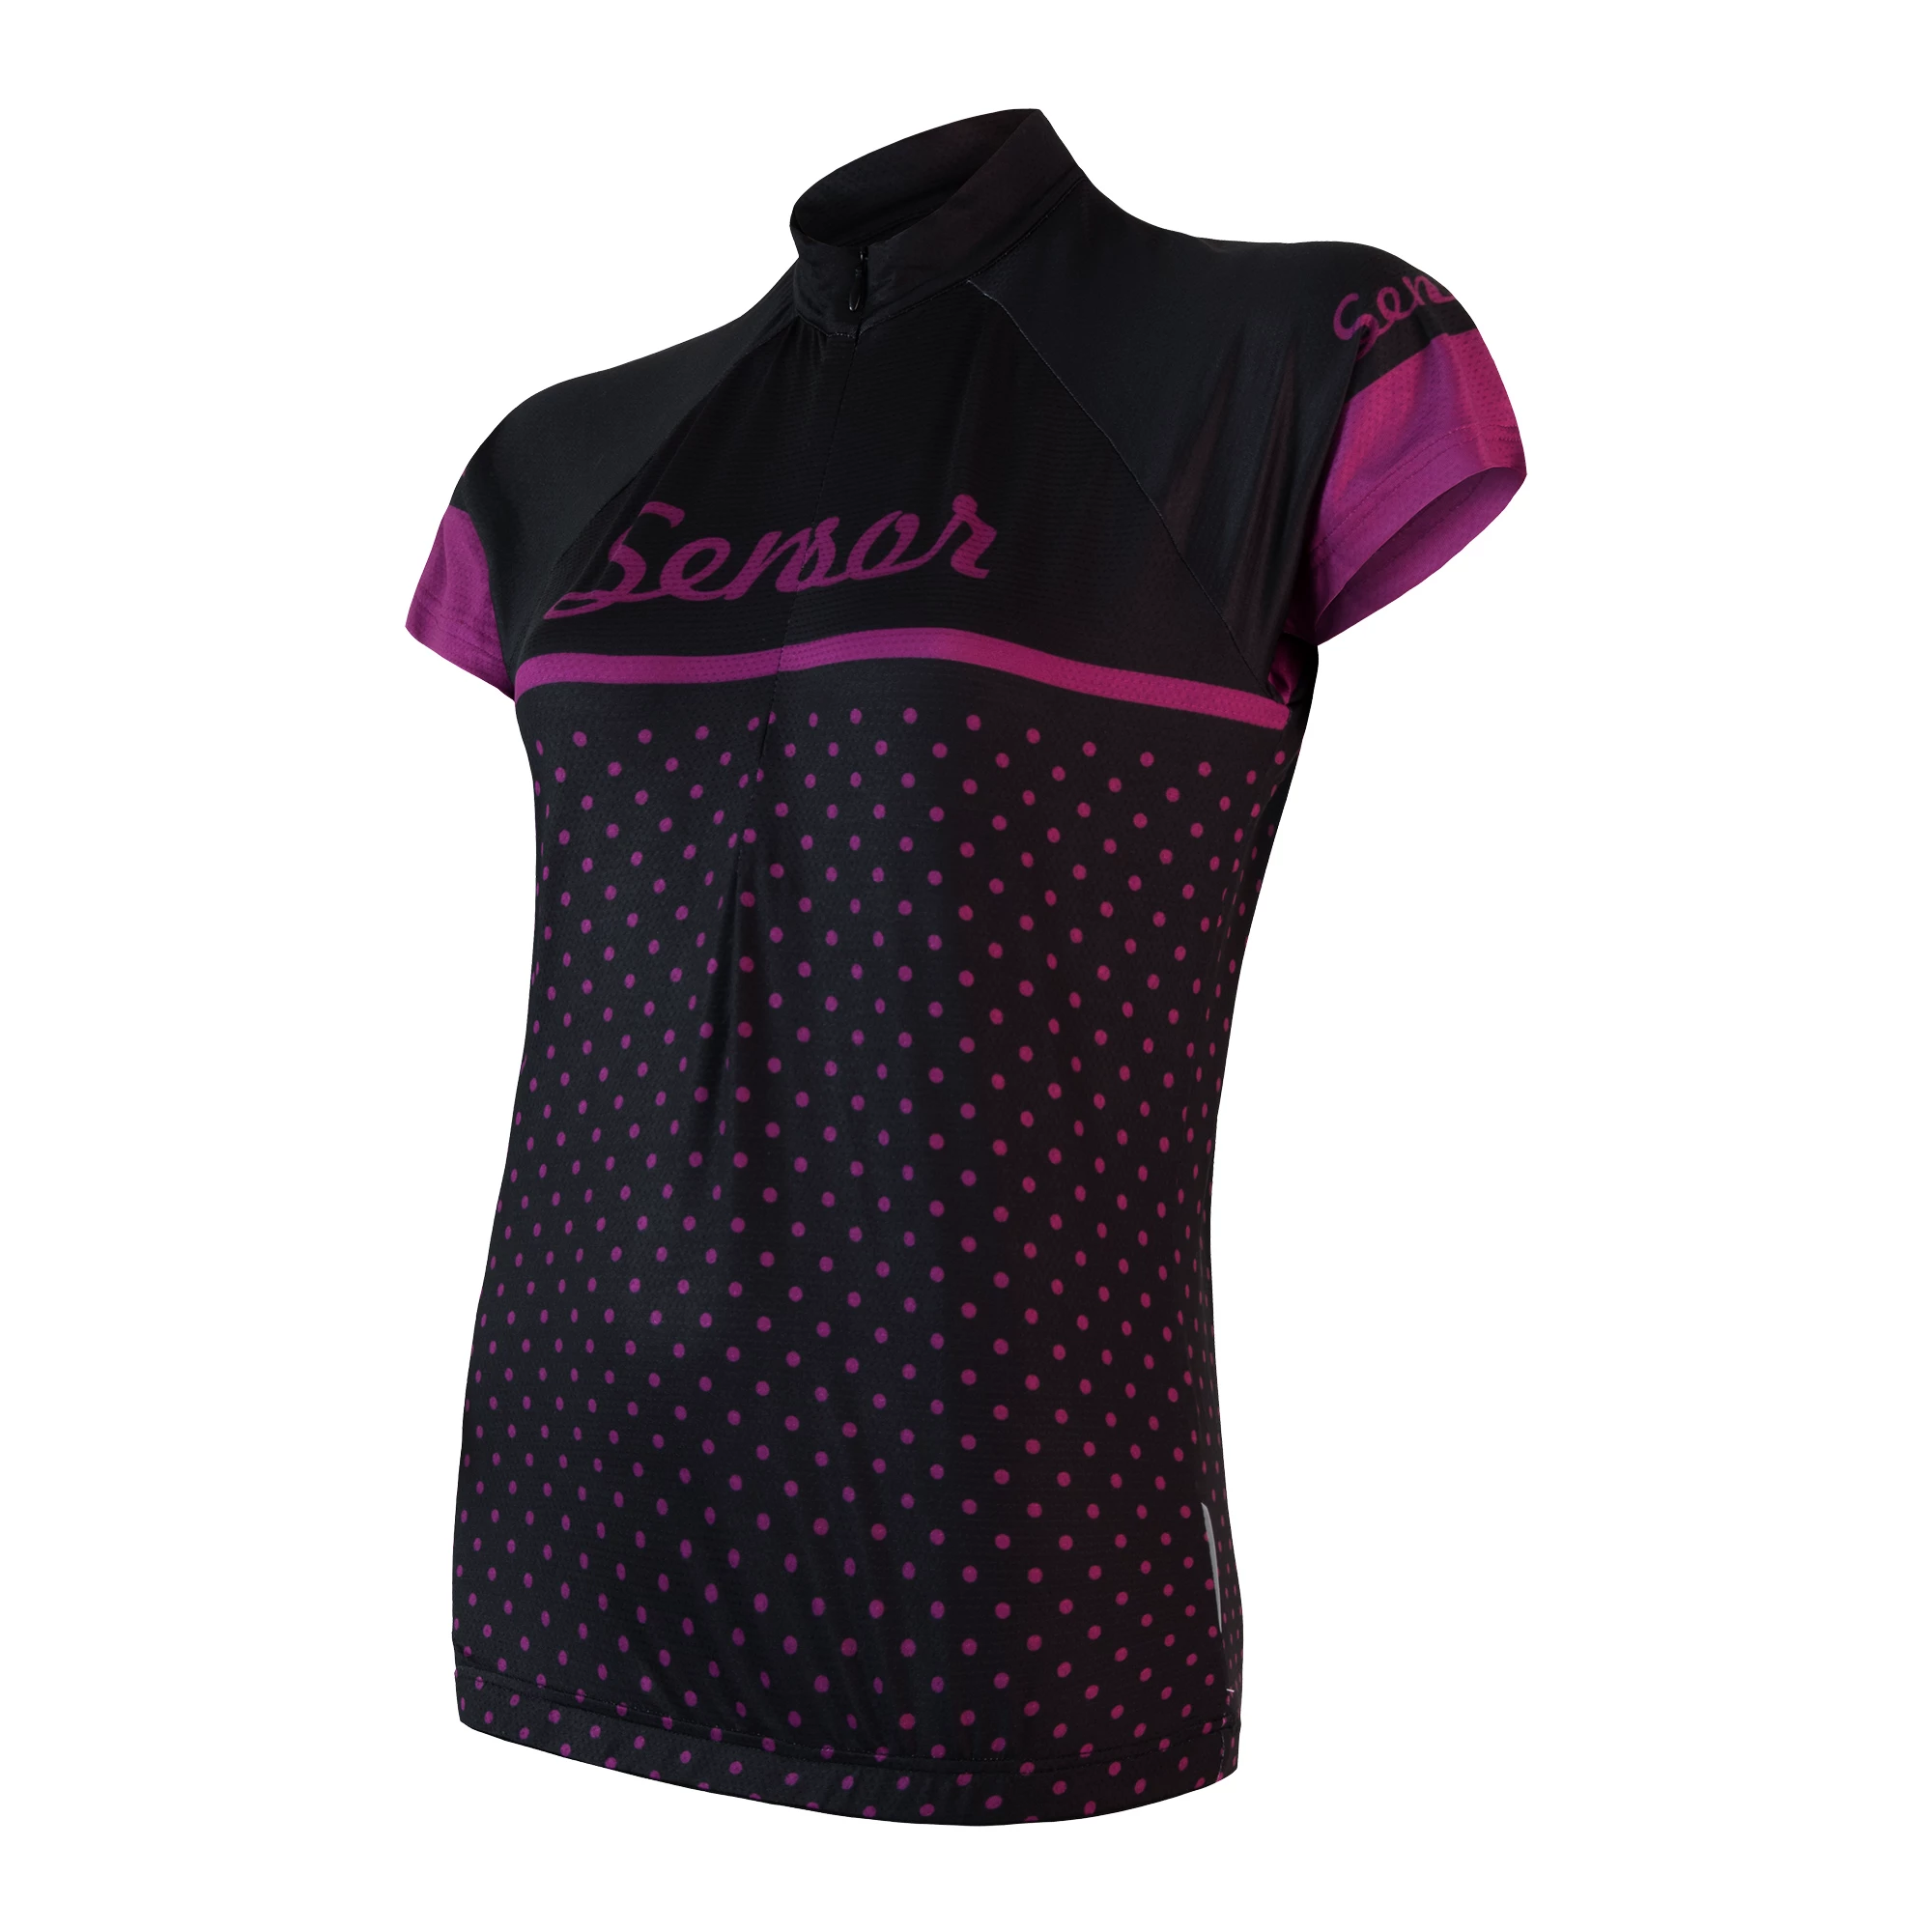 Women's cycling jersey Sensor Cyklo Dots Black